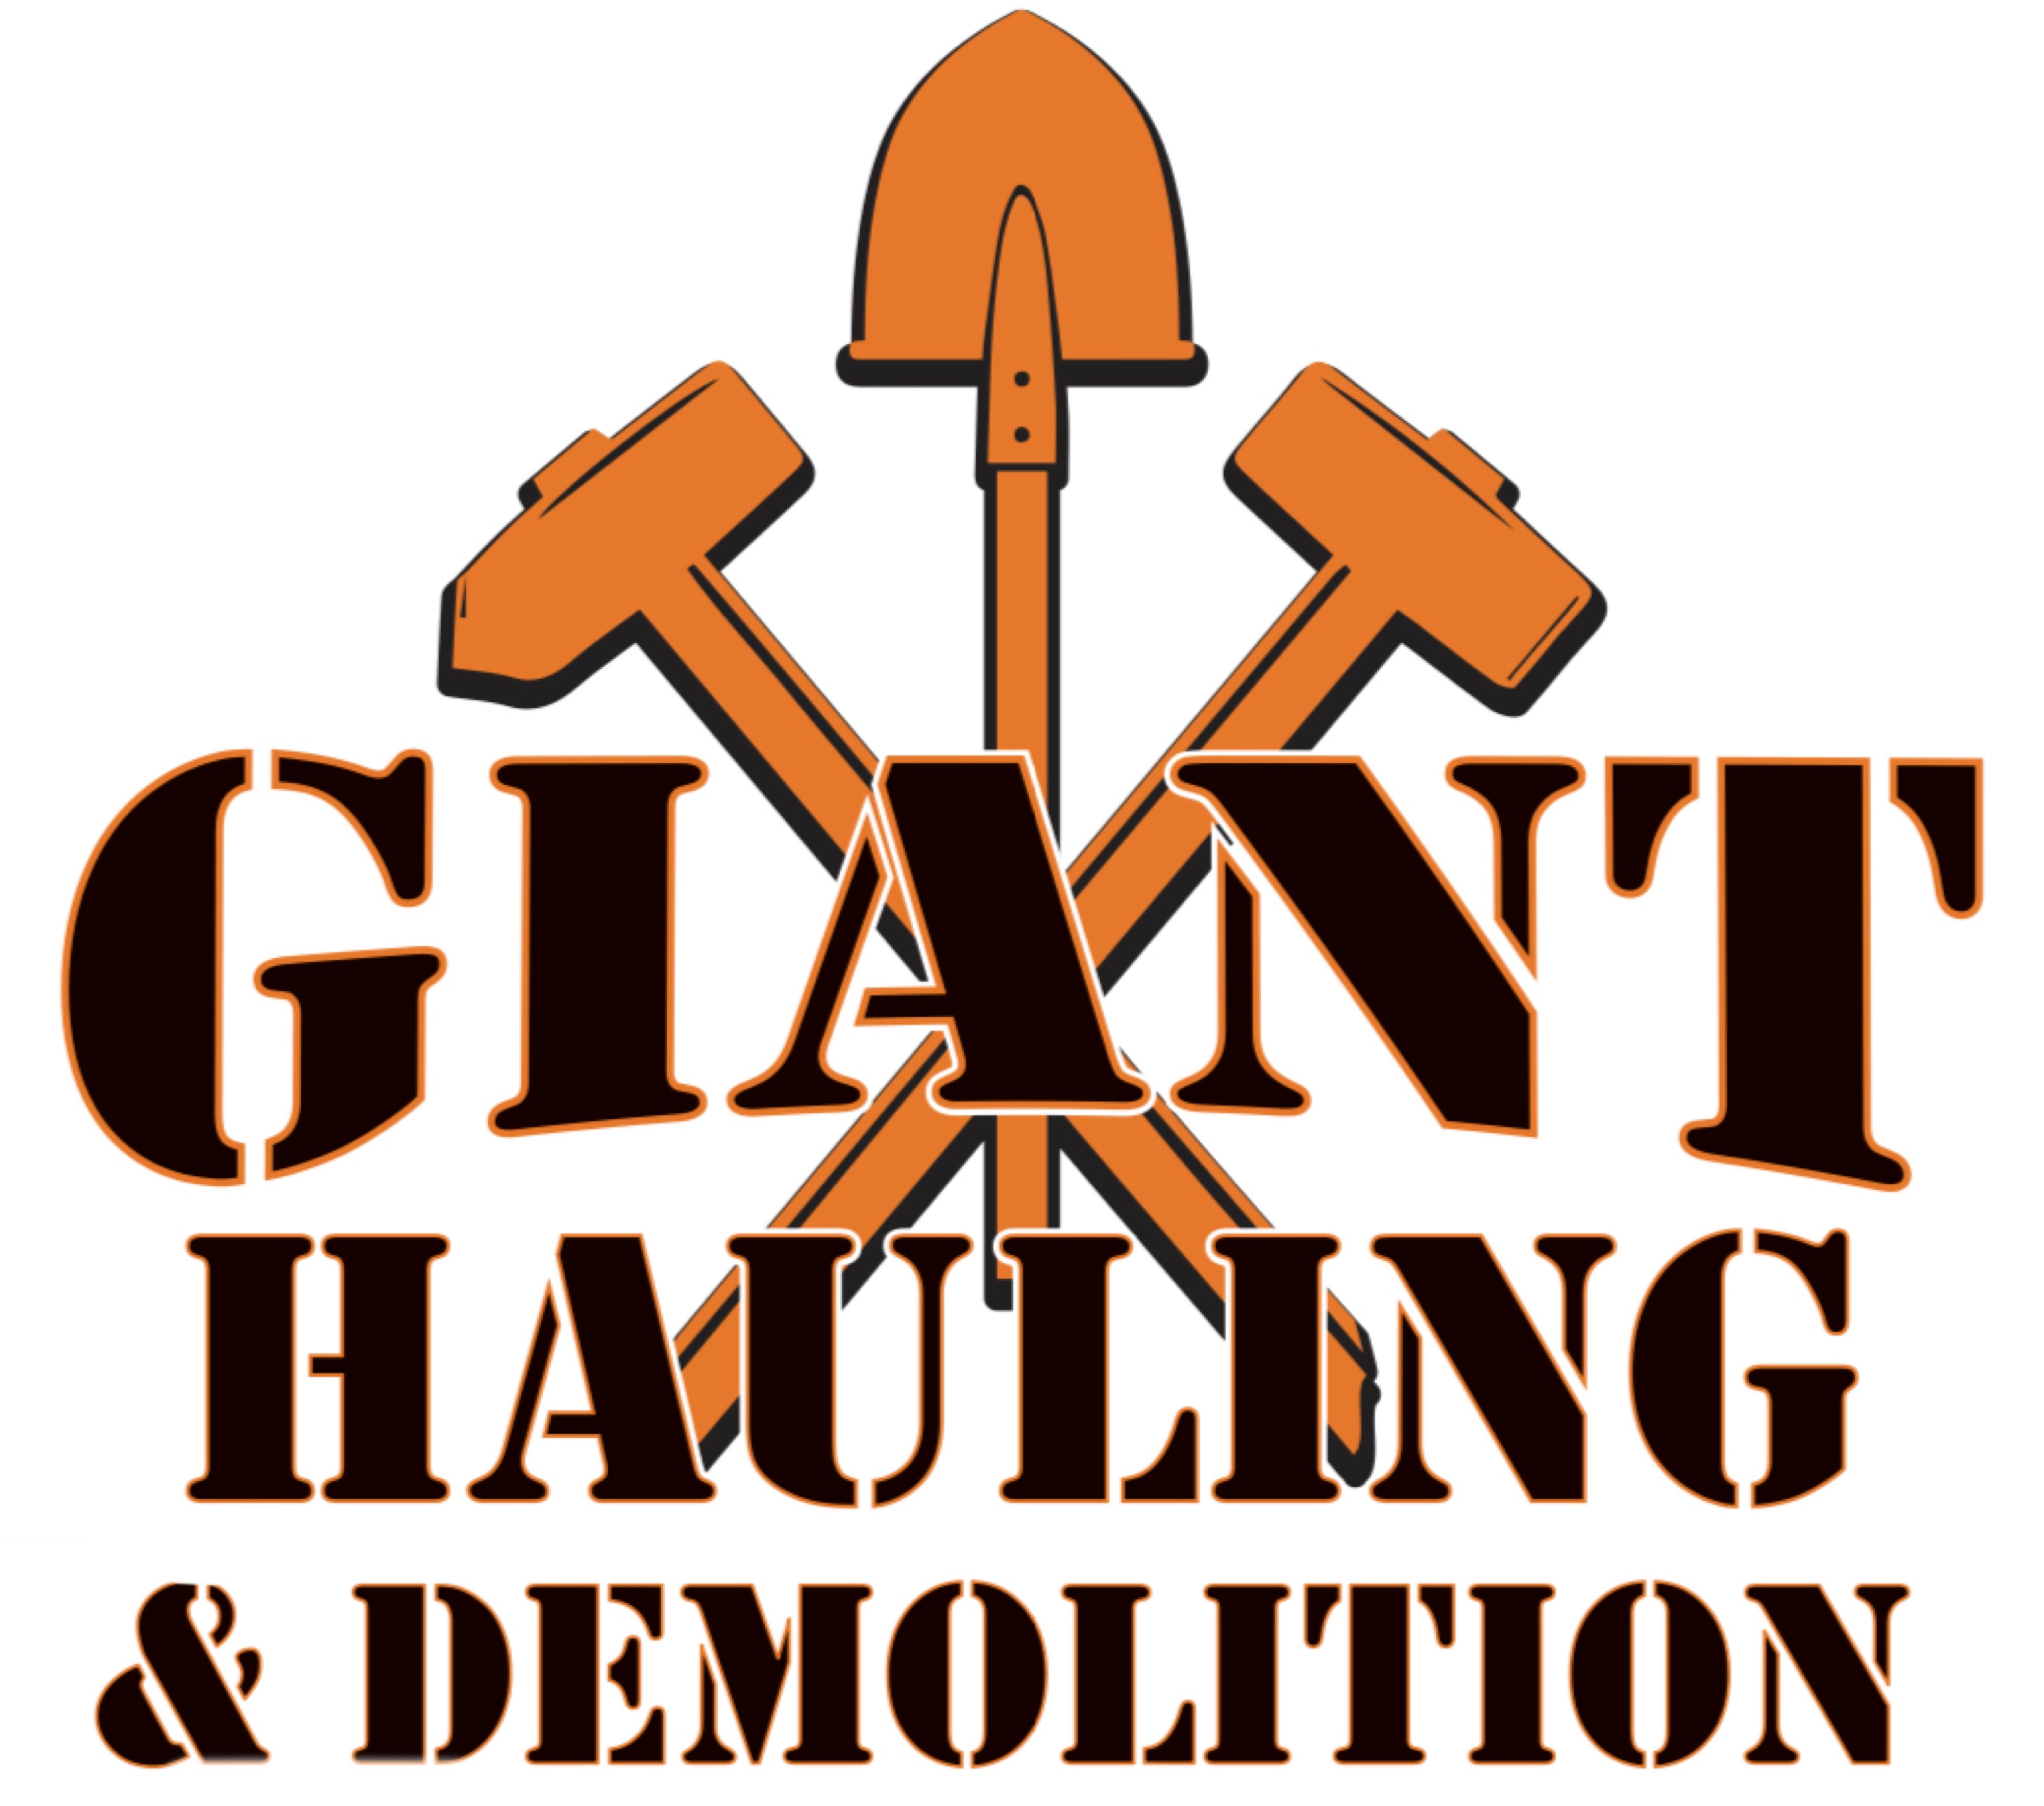 Giant Hauling & Demolition, Inc. Logo